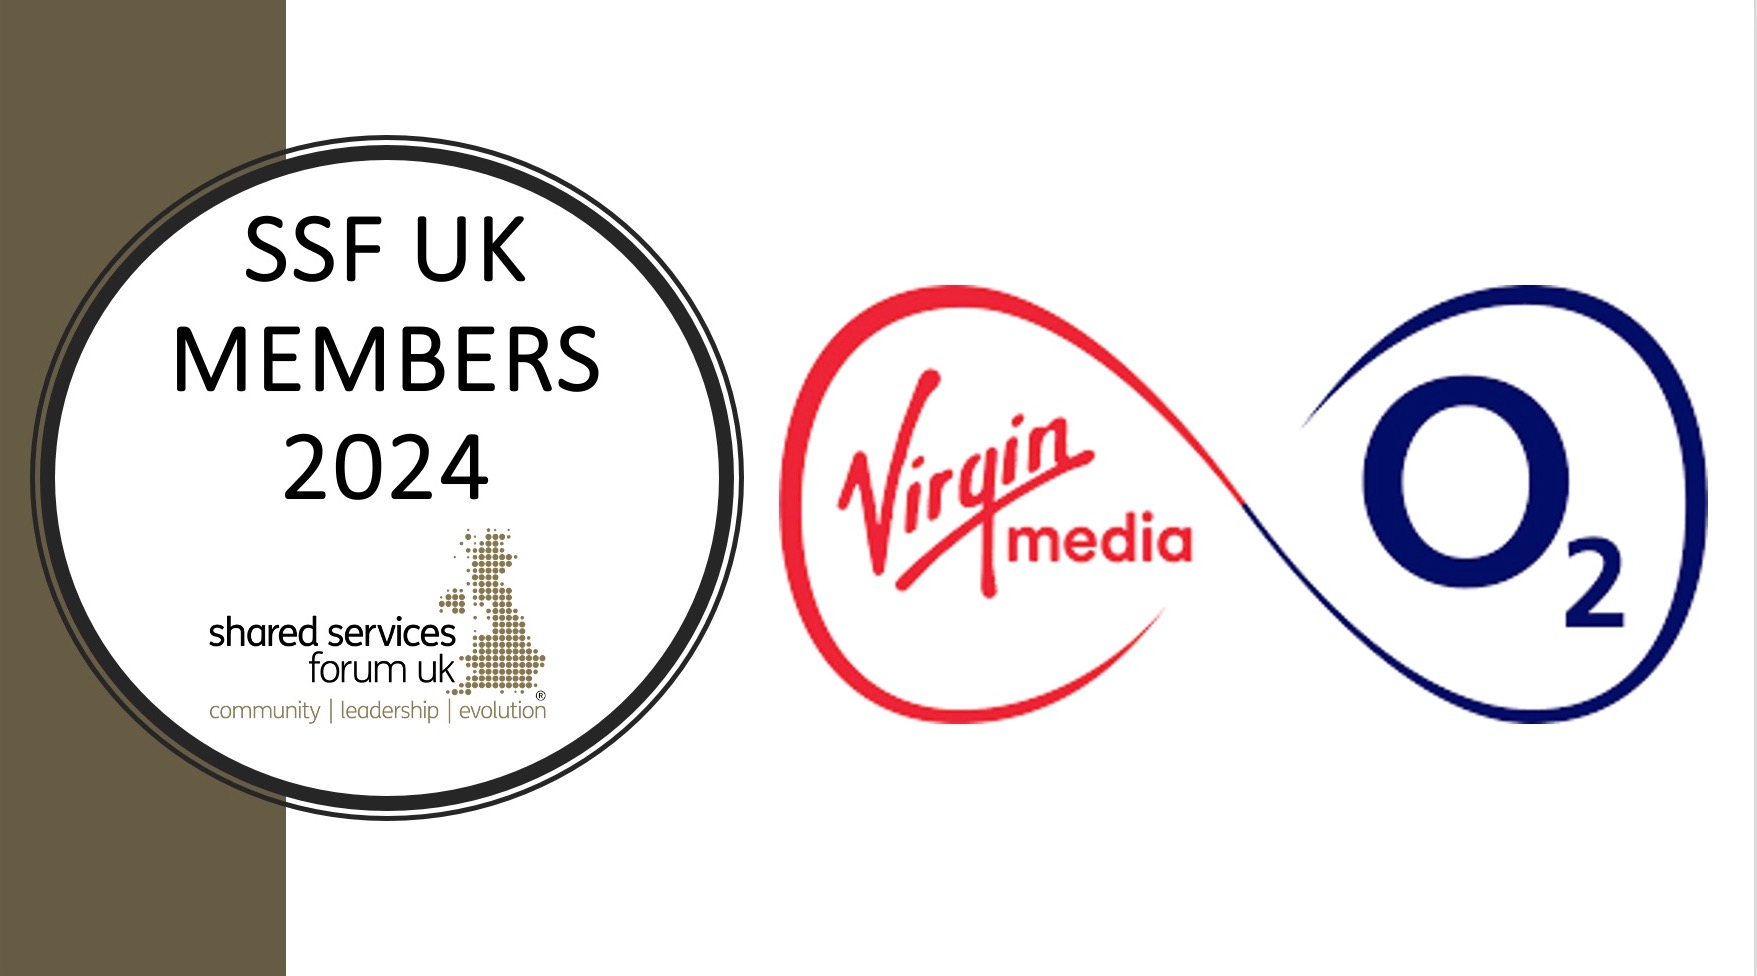 WELCOMING VIRGIN MEDIA O2 AS SSF UK NEW MEMBERS FOR 2024